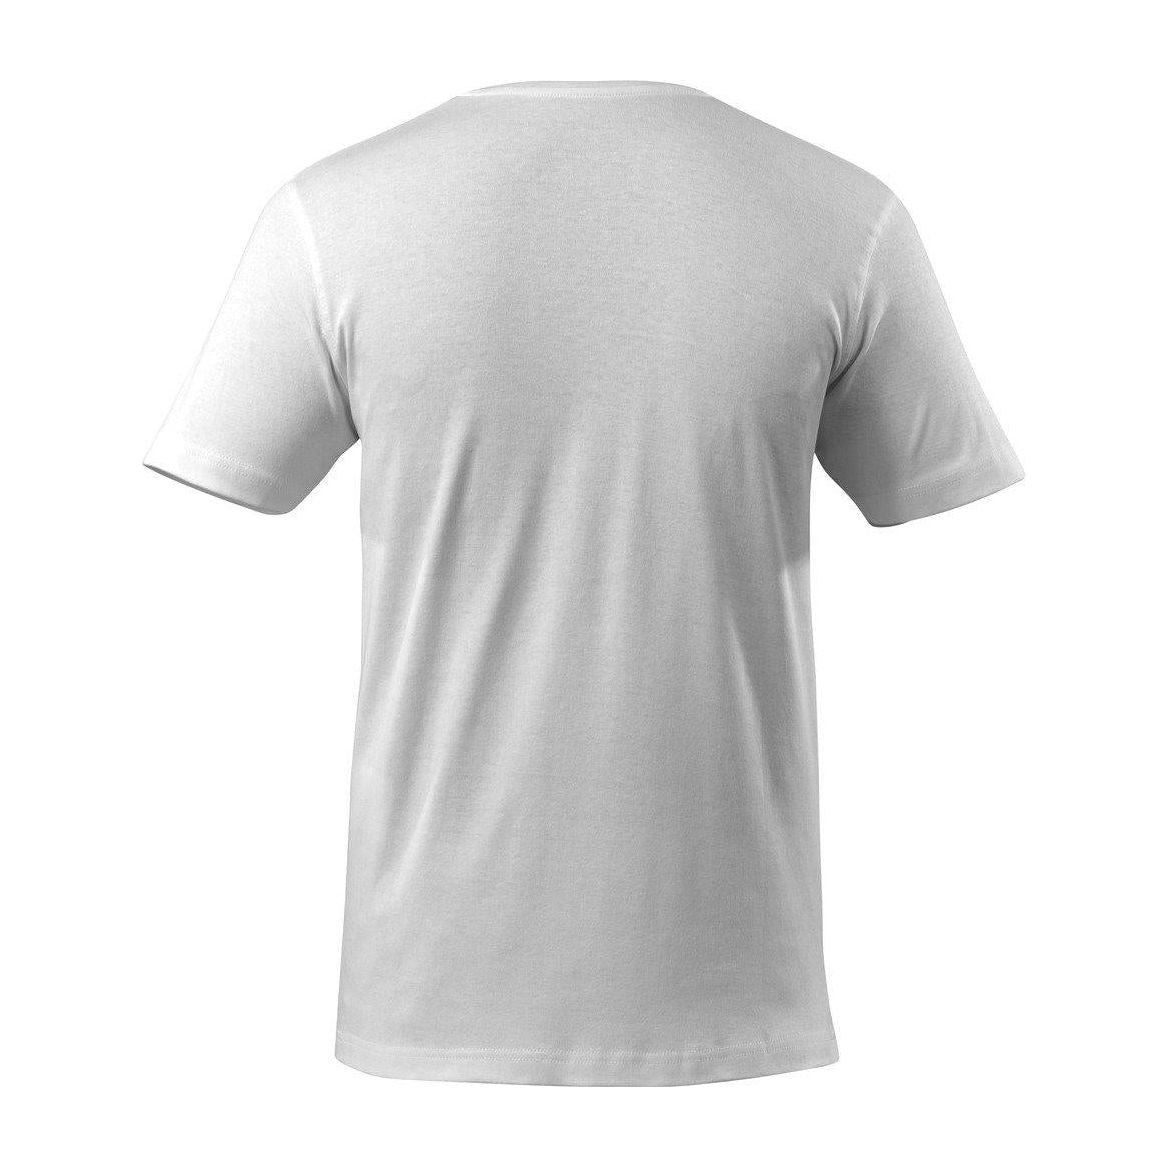 Mascot Vence T-shirt Slim-Fit White 51585-967-06 Back